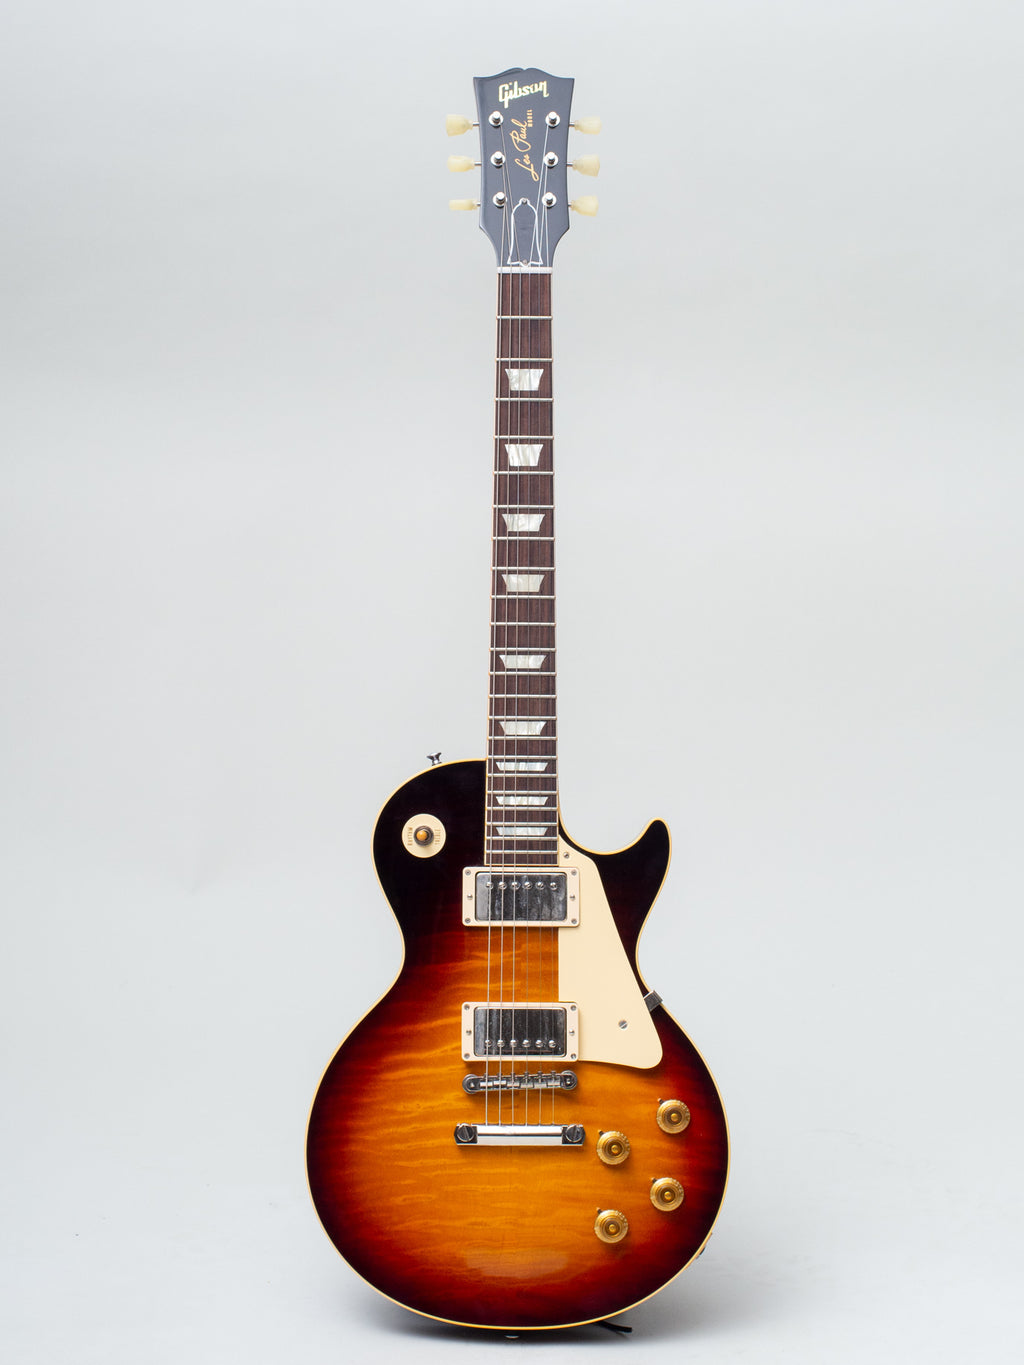 2015 Gibson Les Paul True Historic 1959 Reissue